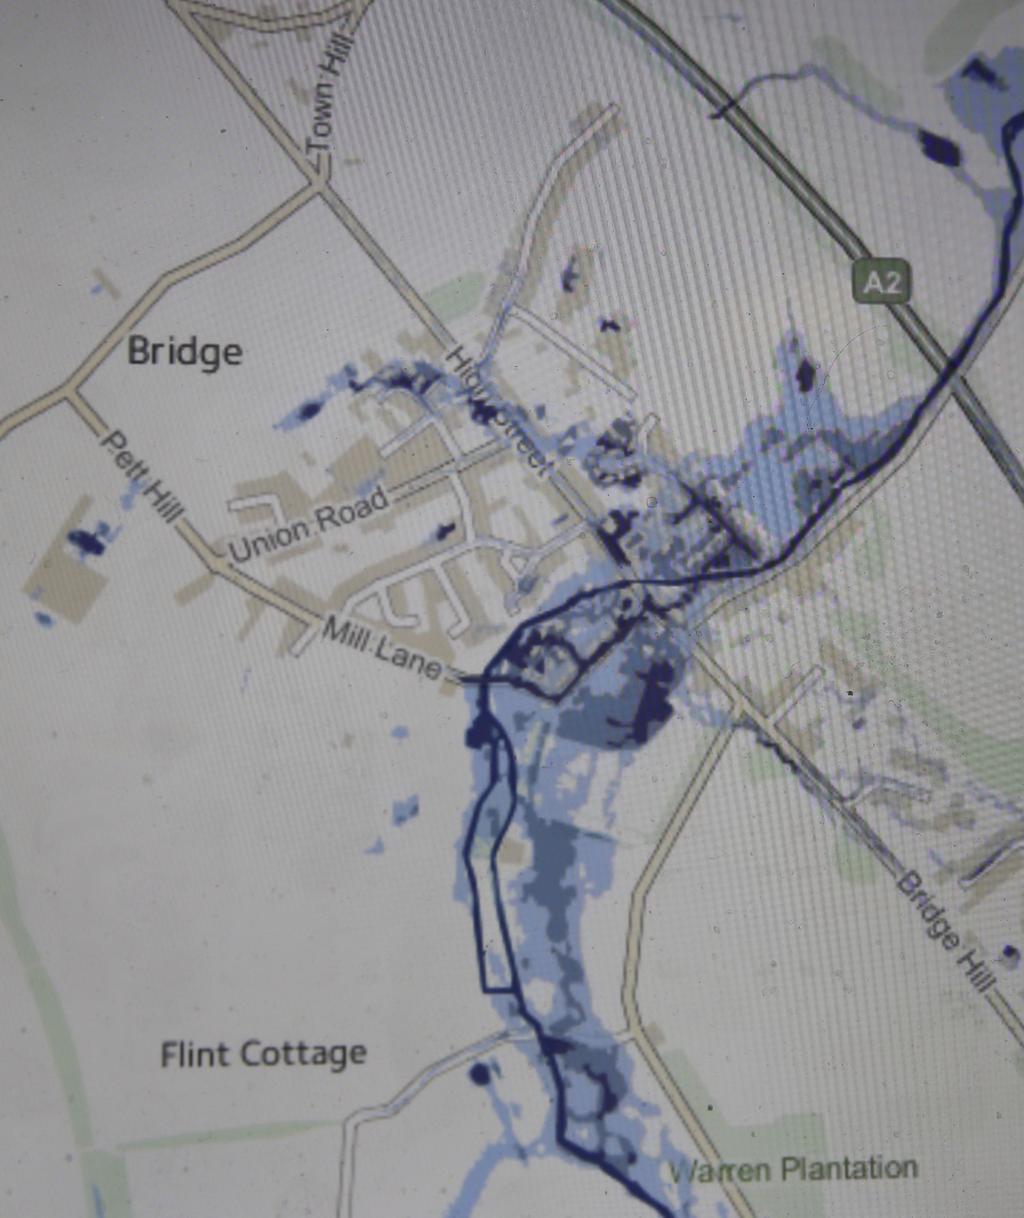 Environment Agency Flood Risk Map for